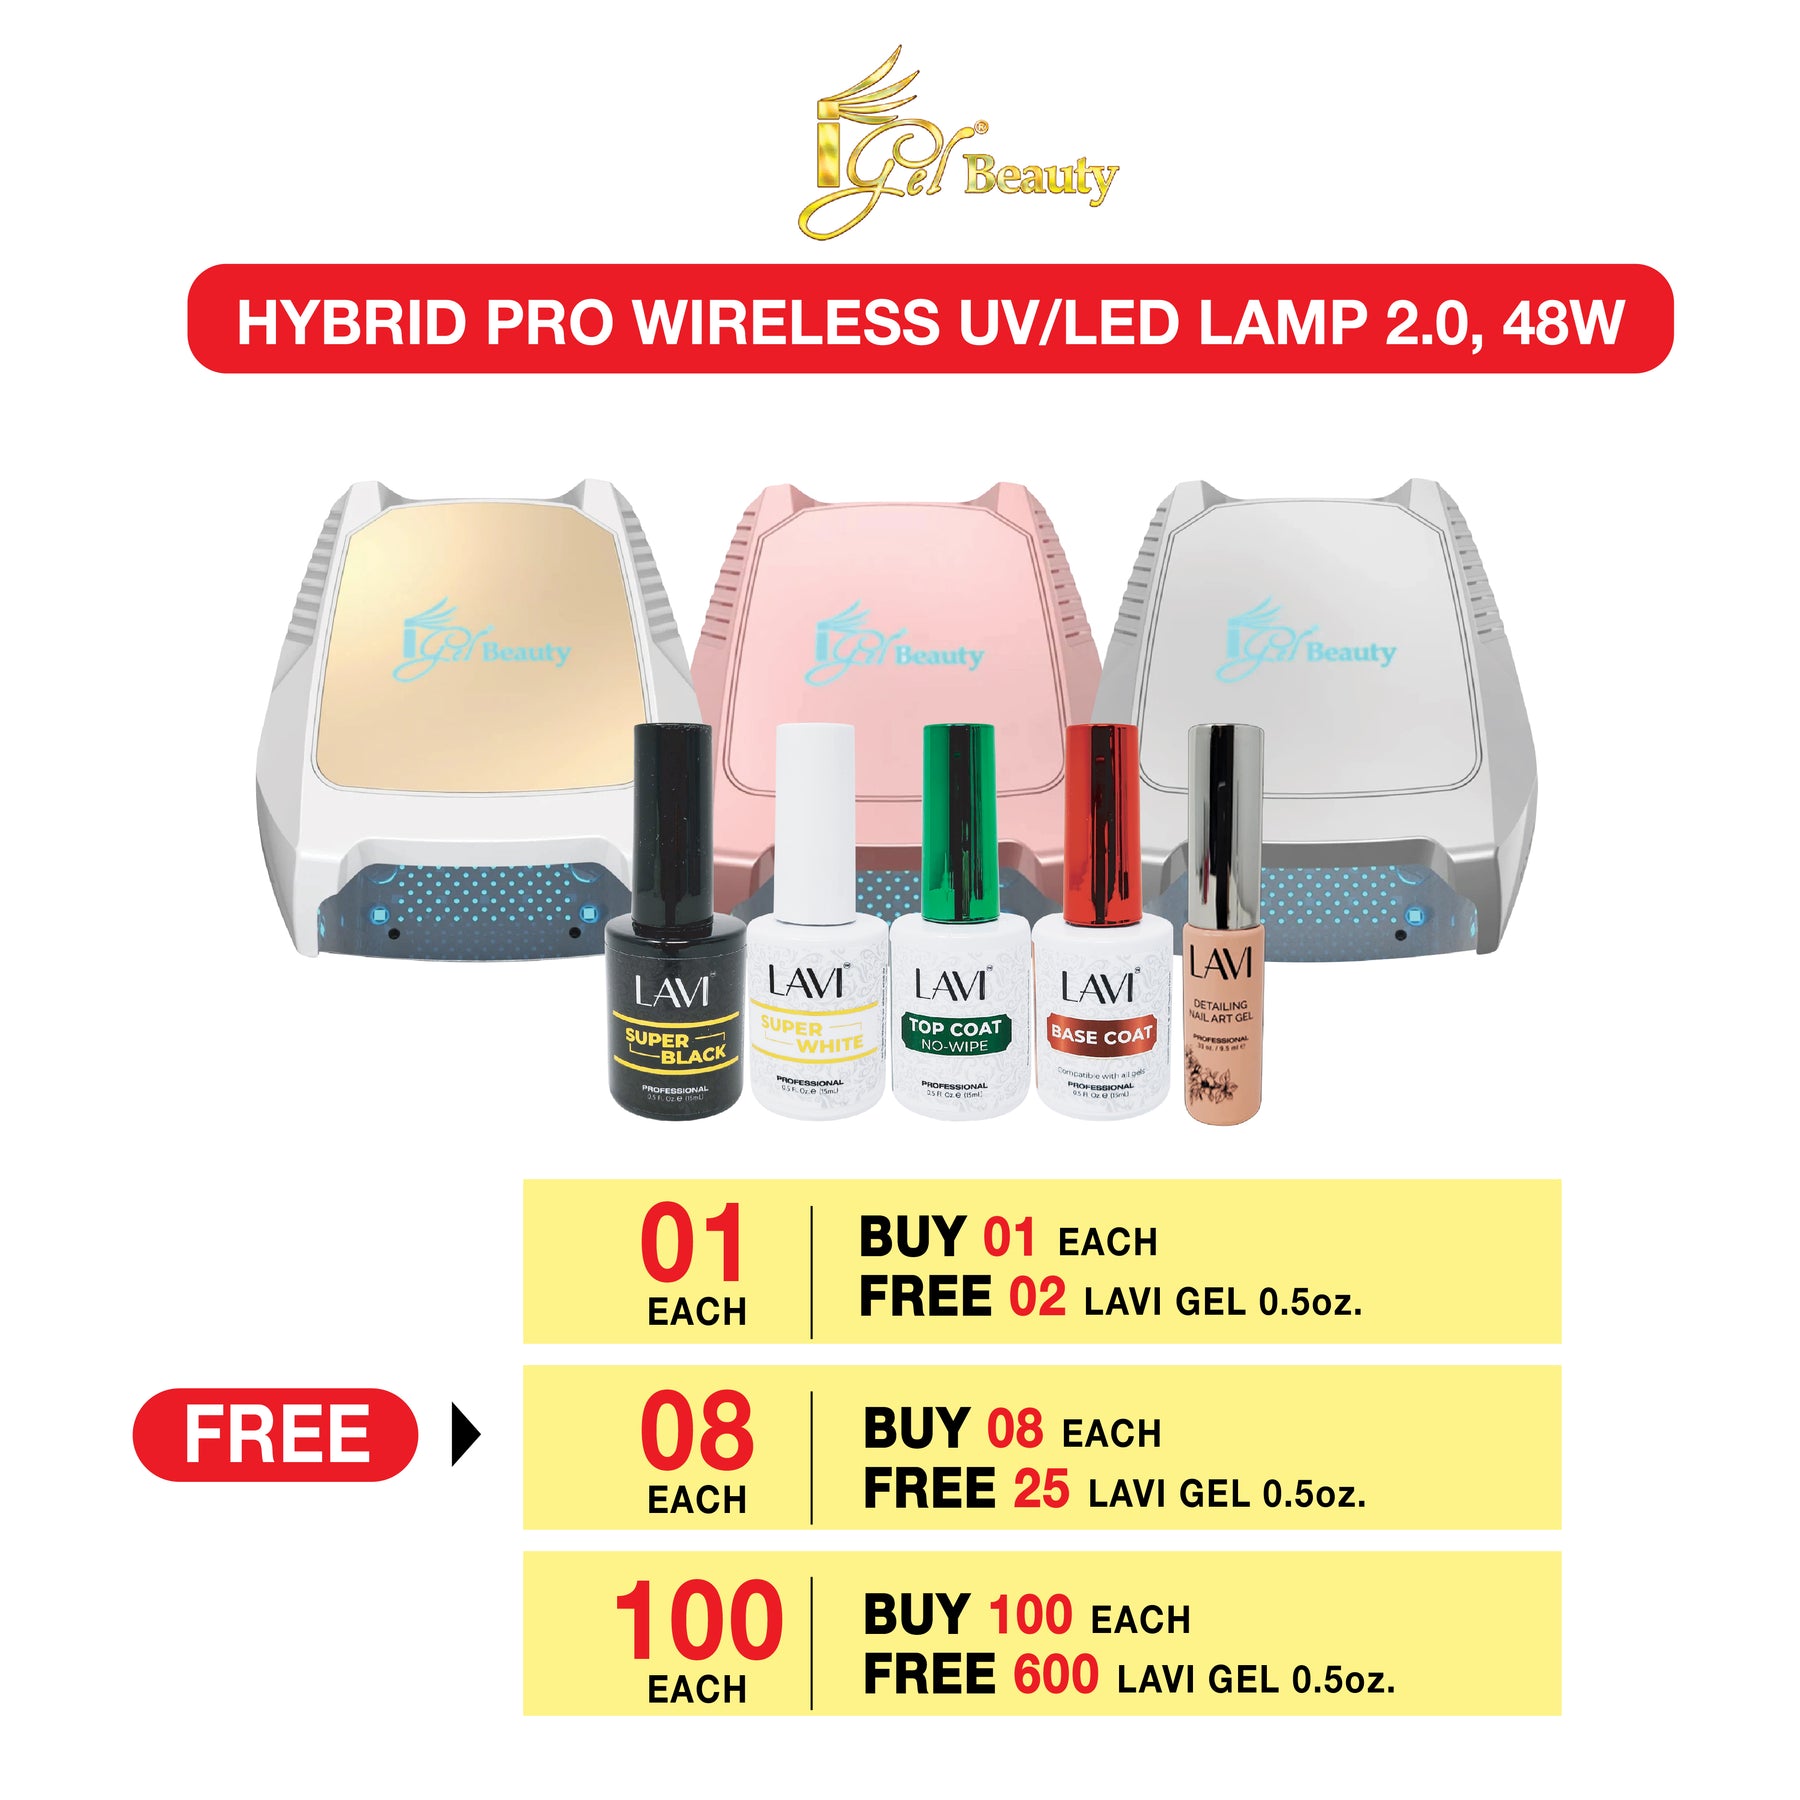 iGel Hybro Pro Wireless UV/LED Lamp 2.0, 48W. Buy 01 each Free 02 Lavi Gel 0.5oz/Buy 08 each free 25 LAVI Gel 0.5oz/Buy100 each Free 600 LAVI Gel 0.5oz